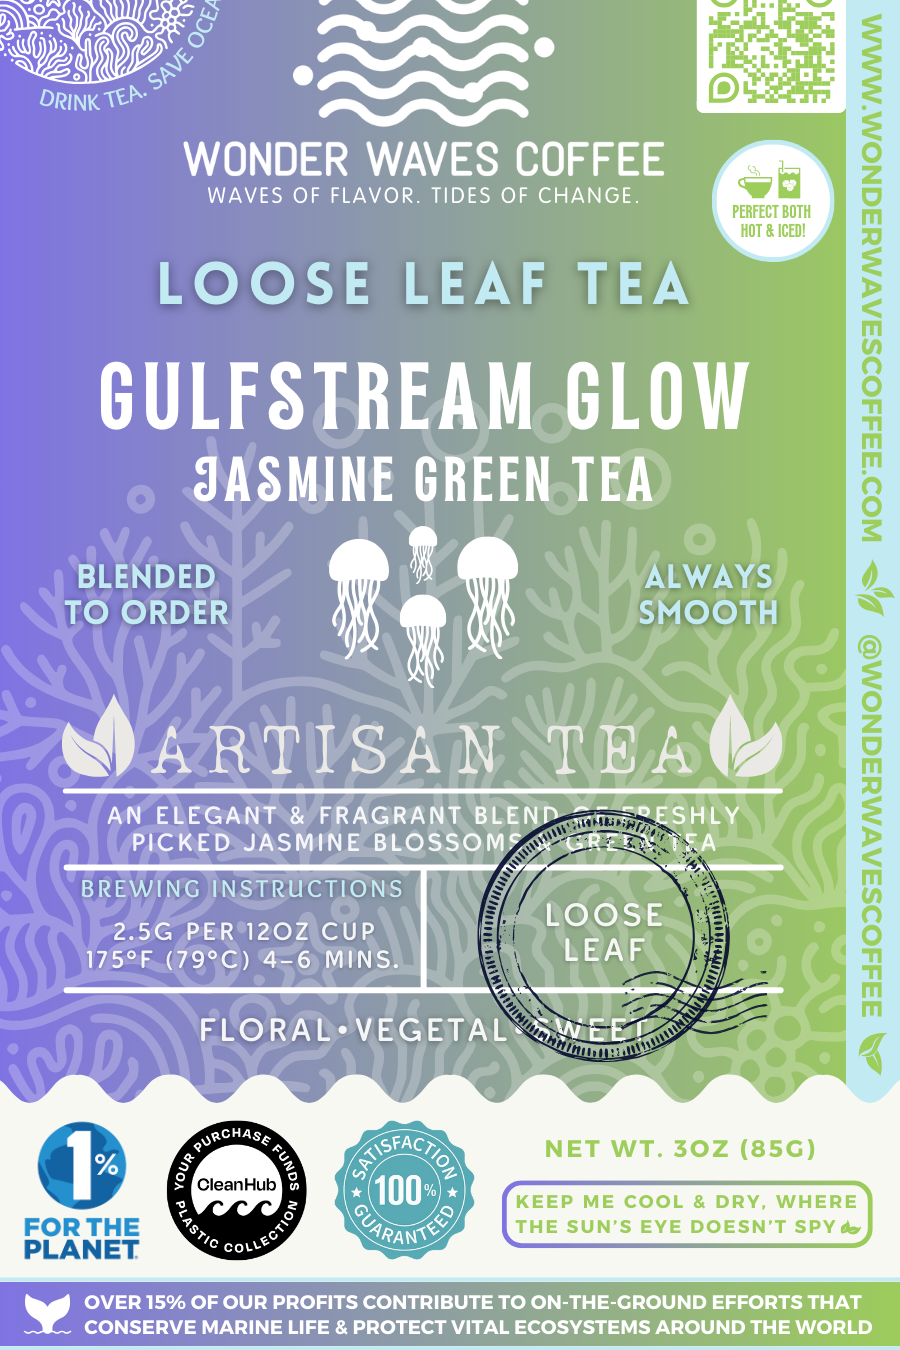 Gulfstream Glow: Jasmine Green Tea 〰 Artisan Loose Leaf Tea - Wonder Waves Coffee